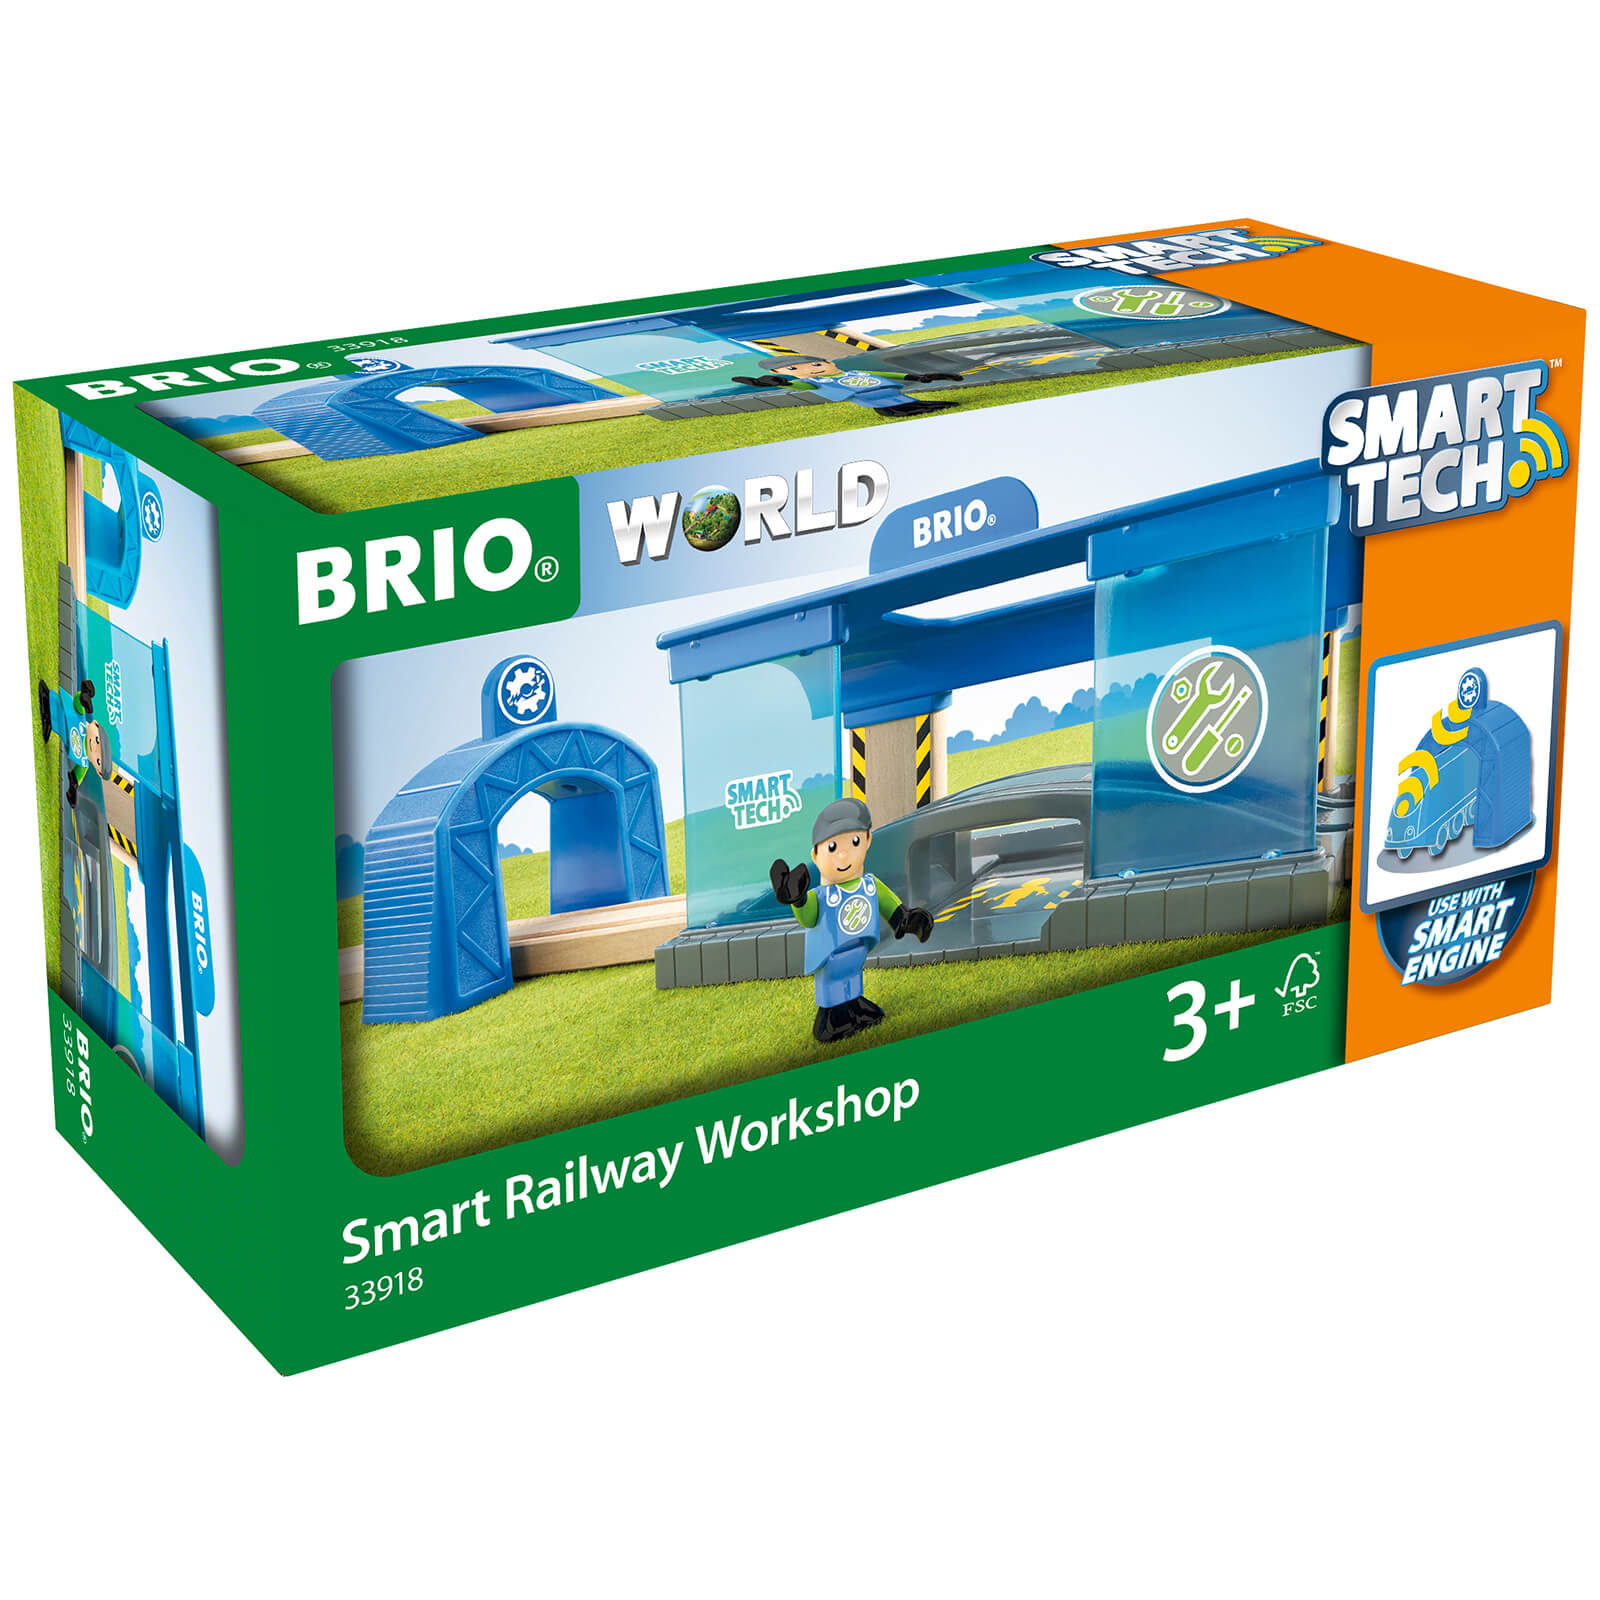 Brio Smart Tech - Railway Workshop